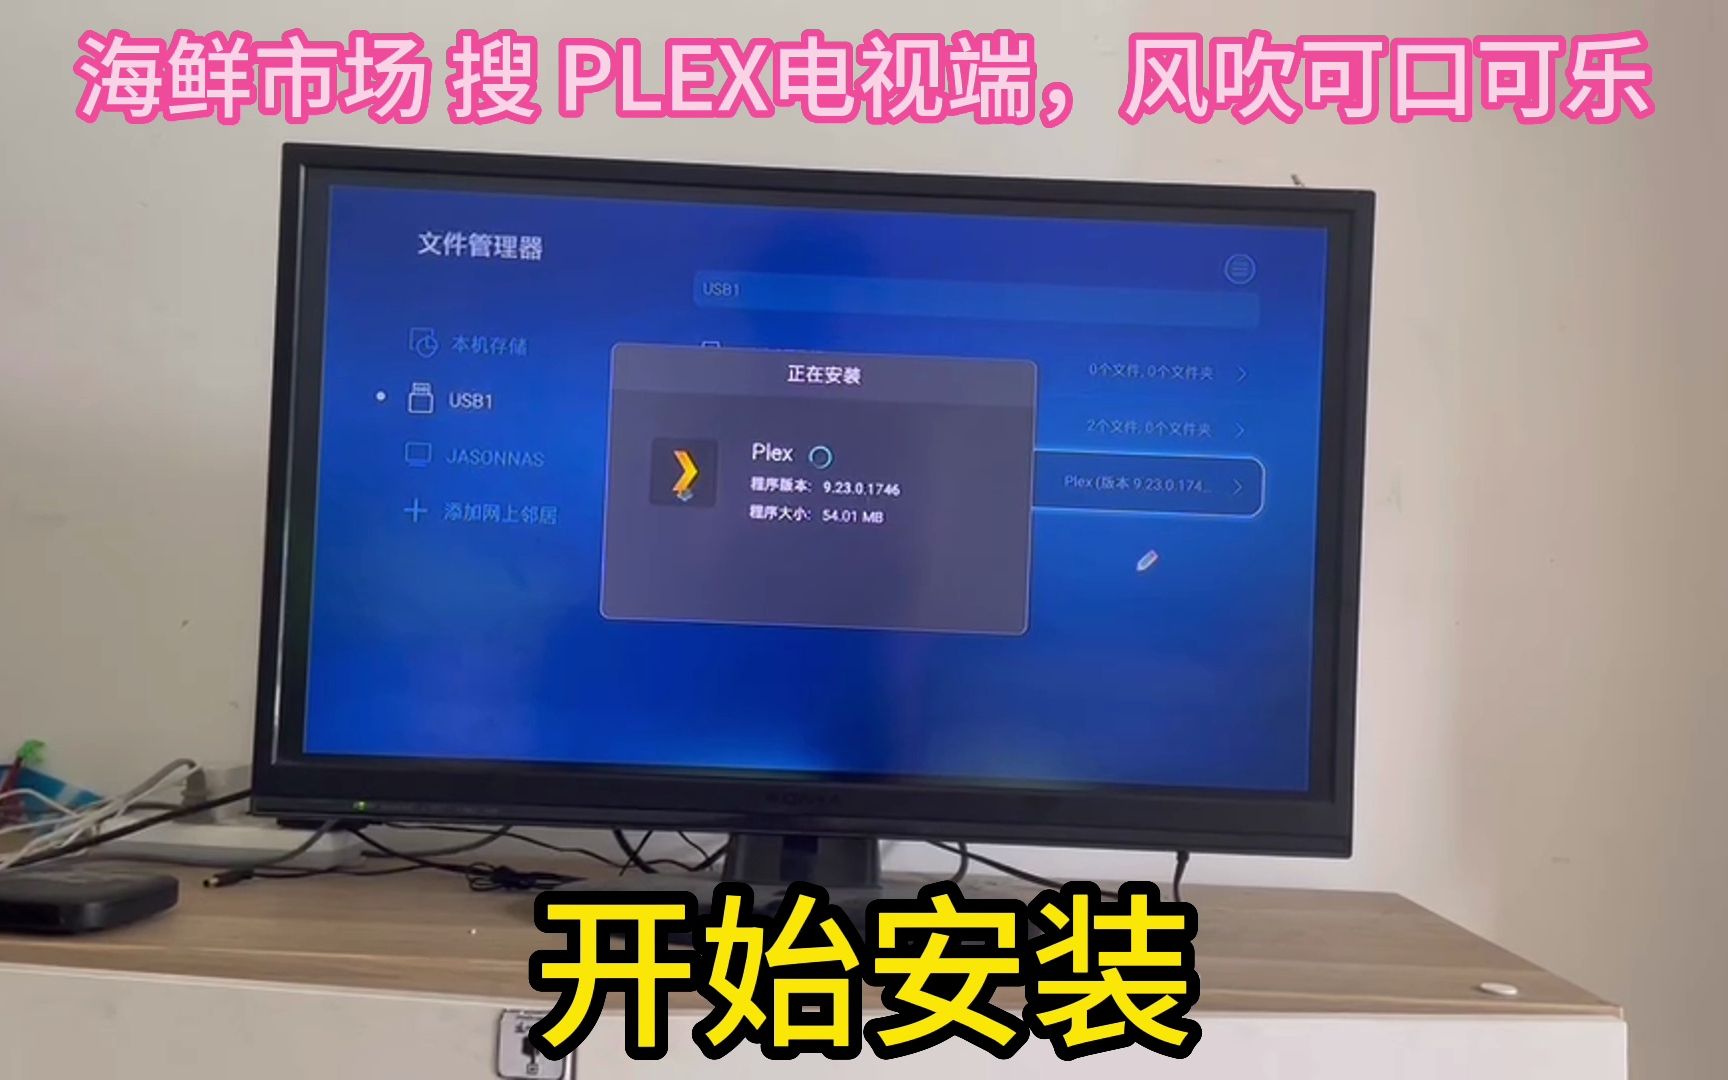 PLEX电视端直接安装，不需要科学上网，不需要AptoideTV或KODI插件